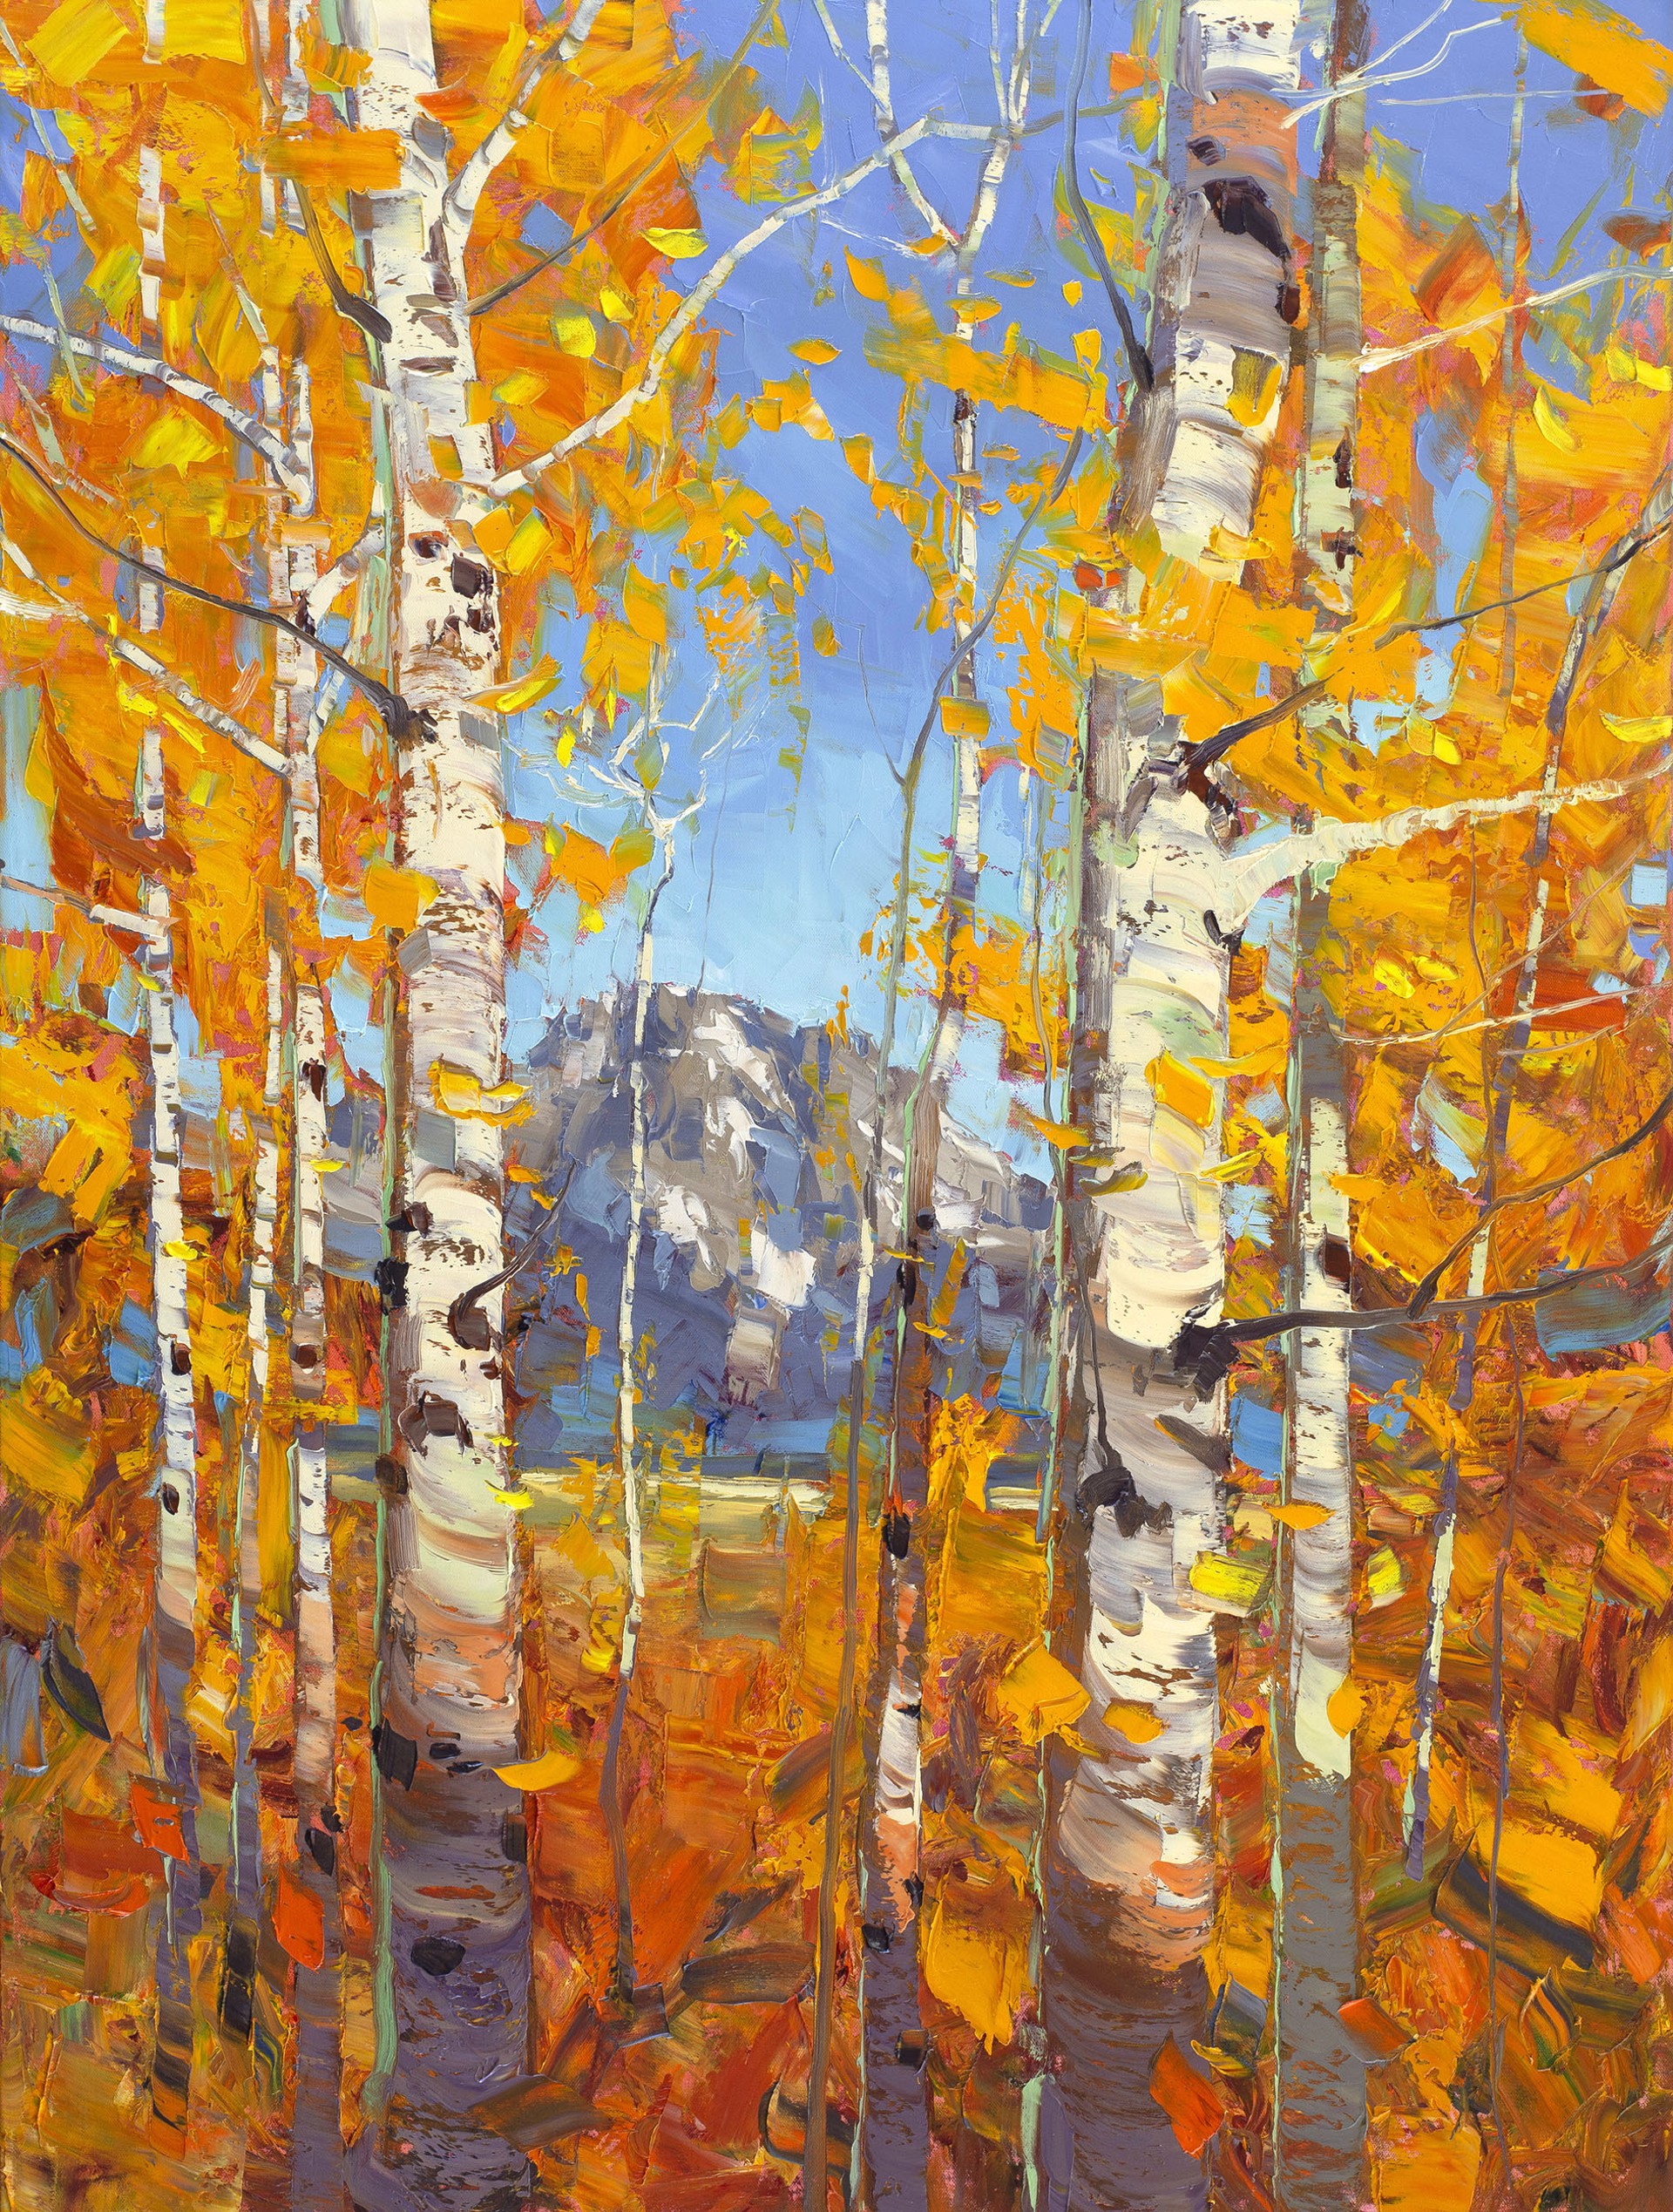 Original Oil Landscape Painting Featuring A Mountain Peak Through Aspen Trees With Orange Foliage Against A Blue Sky